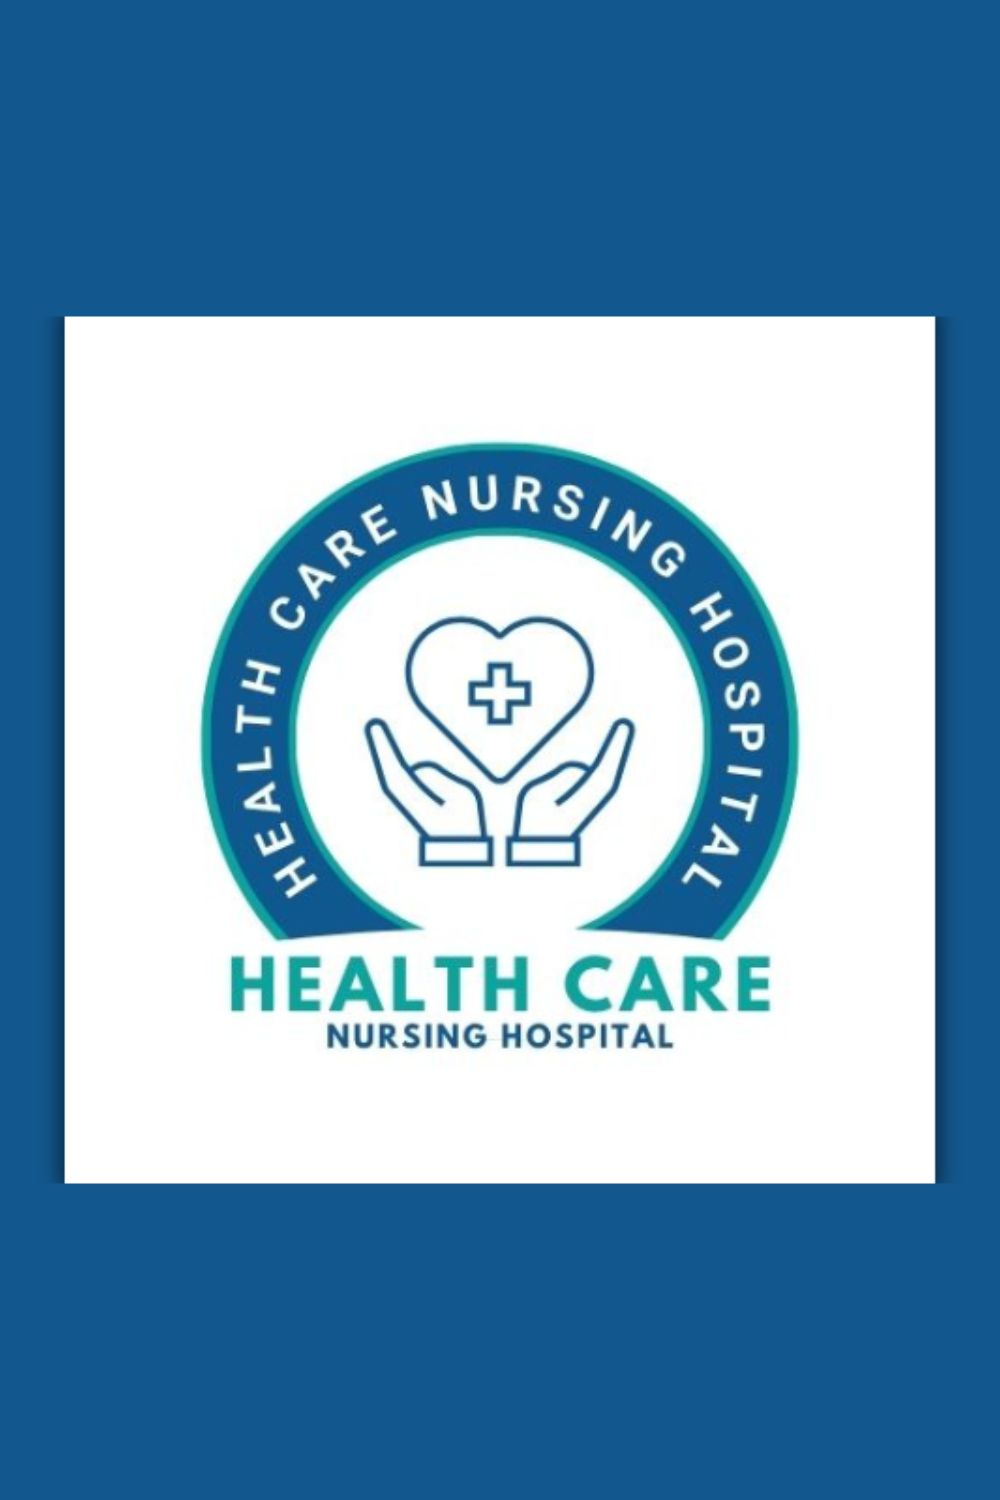 Editable Healthcare Logo Templates for Canva | Modern Medical Designs pinterest preview image.